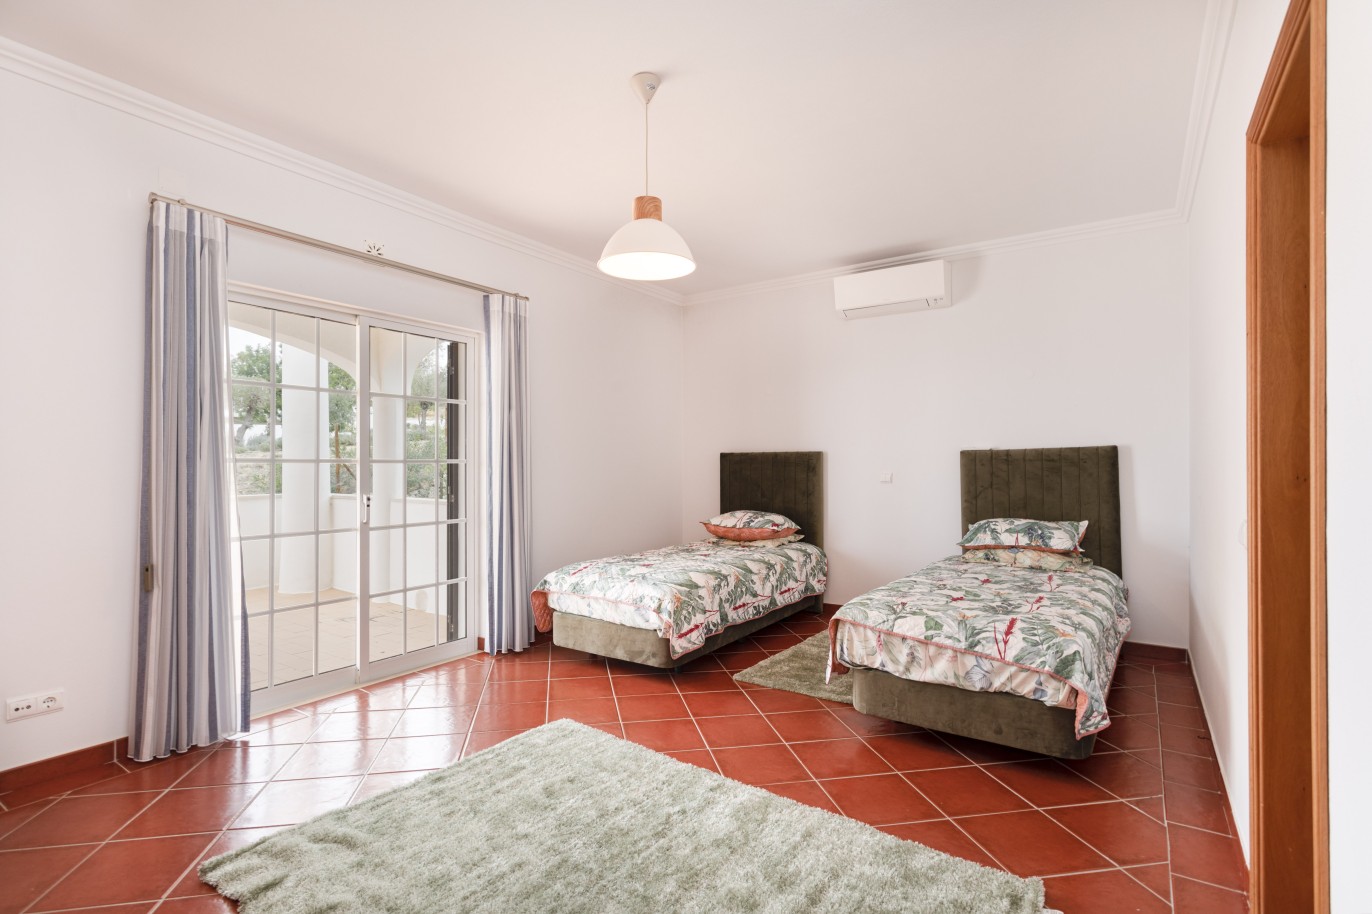 4-Bedroom Villa with swimming pool, for sale in Boliqueime, Loulé, Algarve_242633